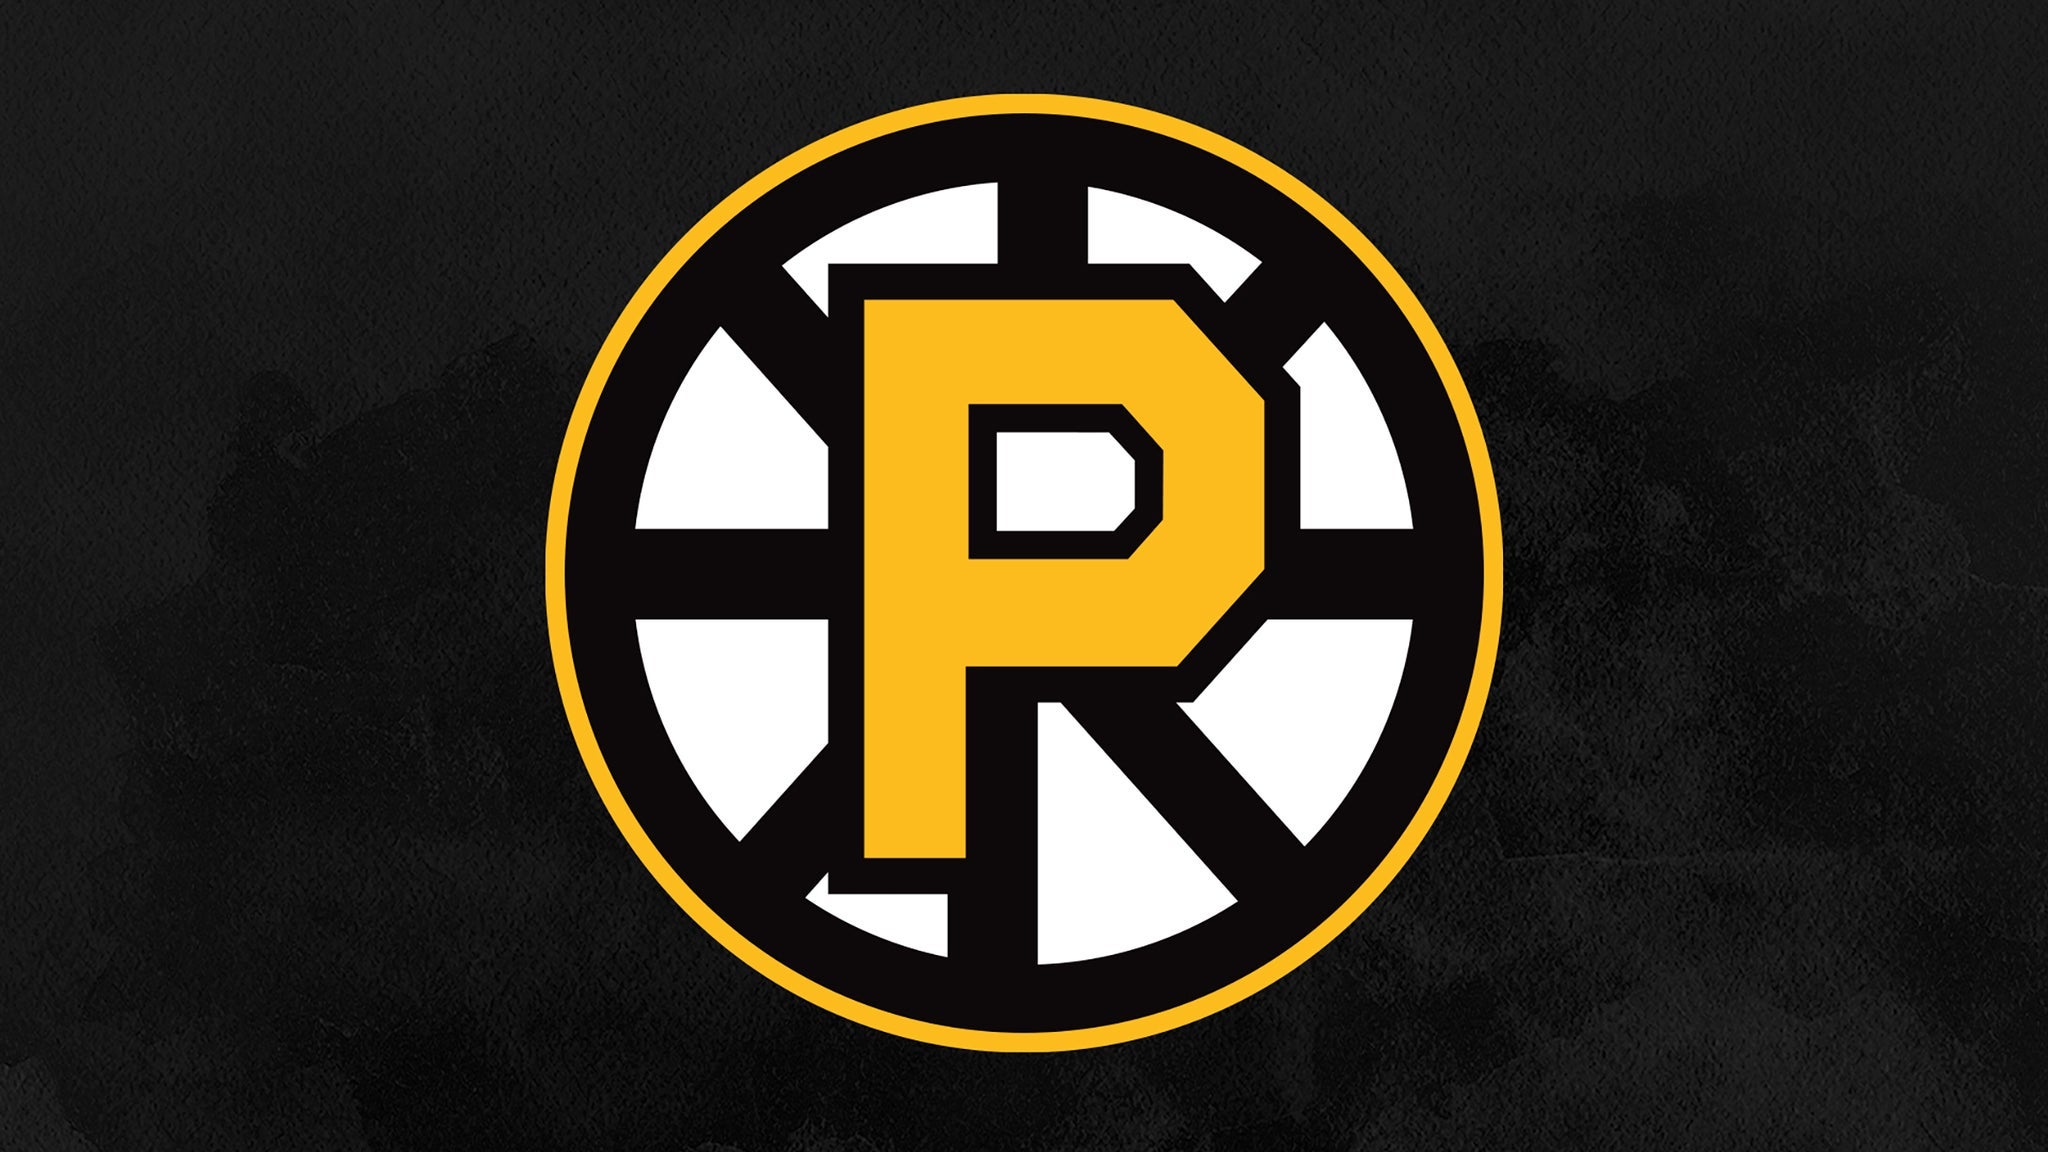 Providence Bruins vs. Bridgeport Islanders - Providence, RI 02903